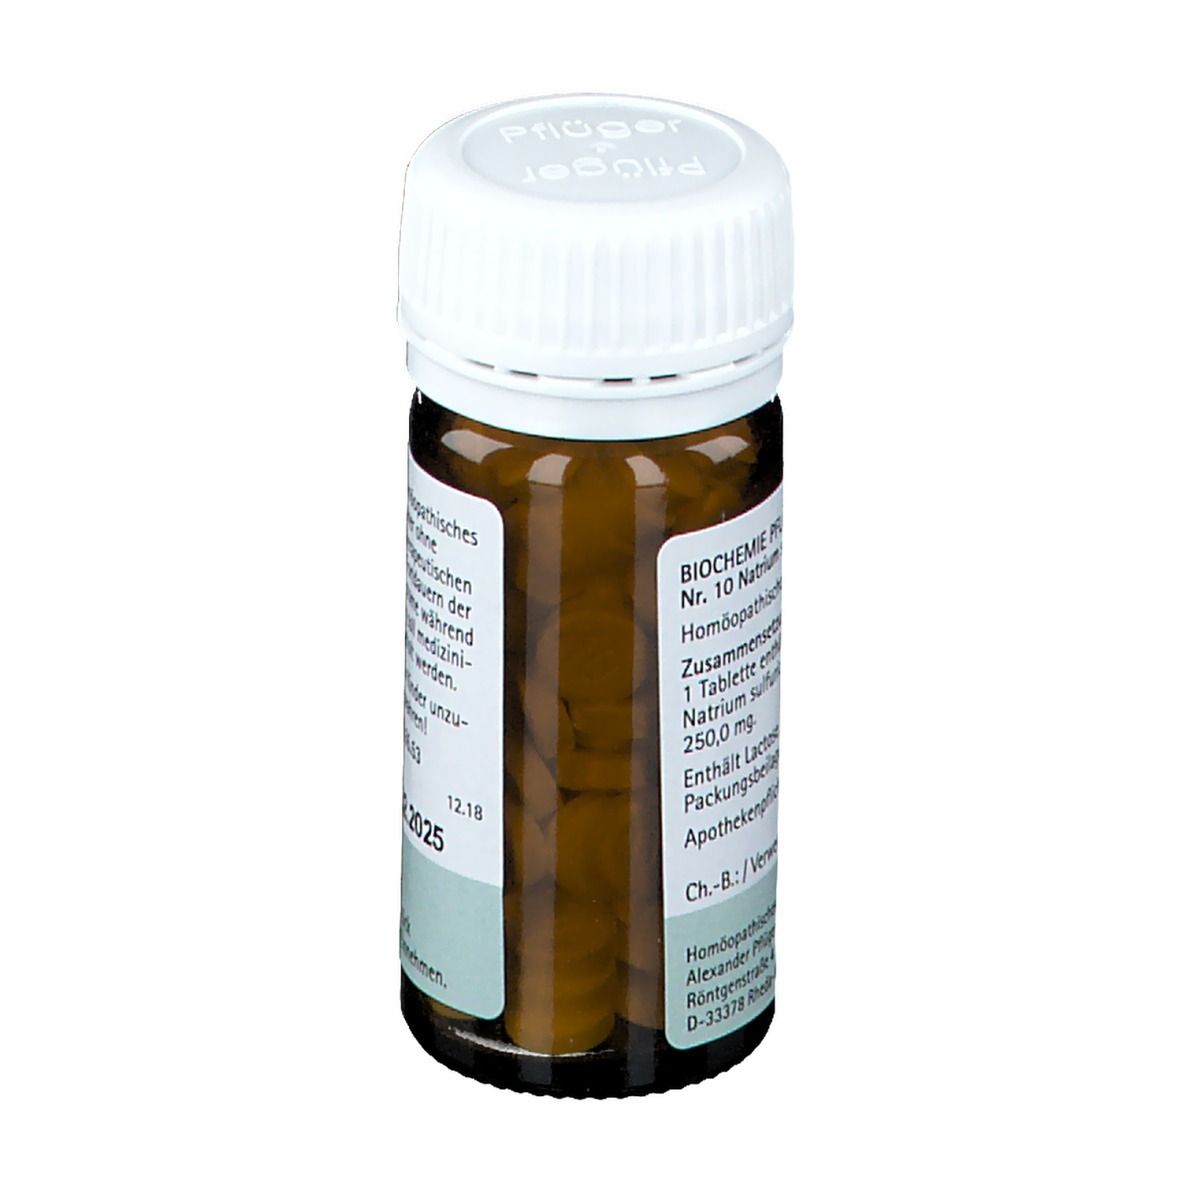 Biochemie Pflüger® Nr. 10 Natrium sulfuricum D6 Tabletten